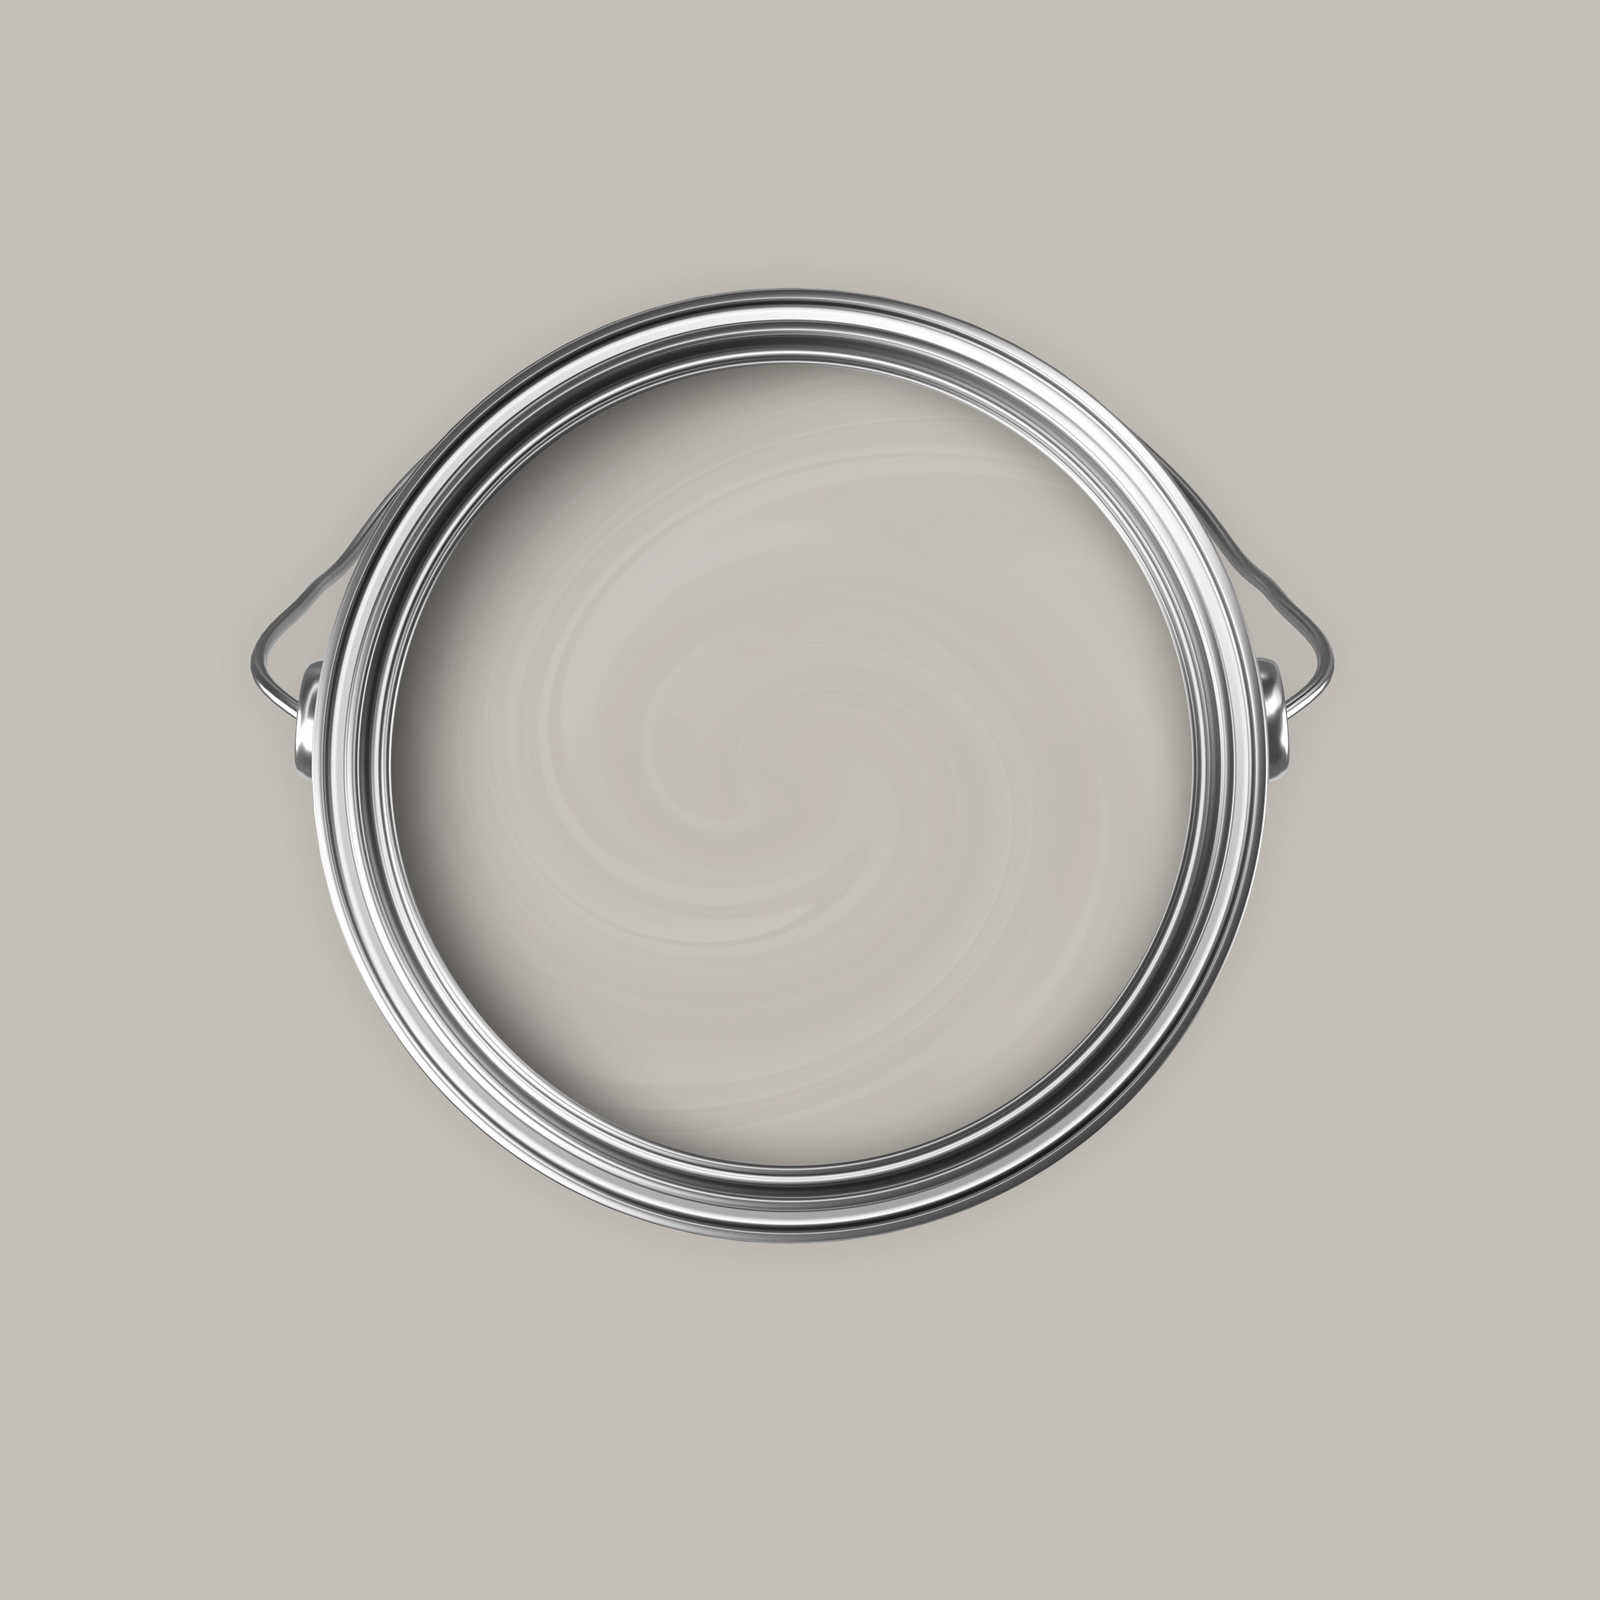             Pintura mural Premium gris seda suave »Creamy Grey« NW111 – 5 litro
        